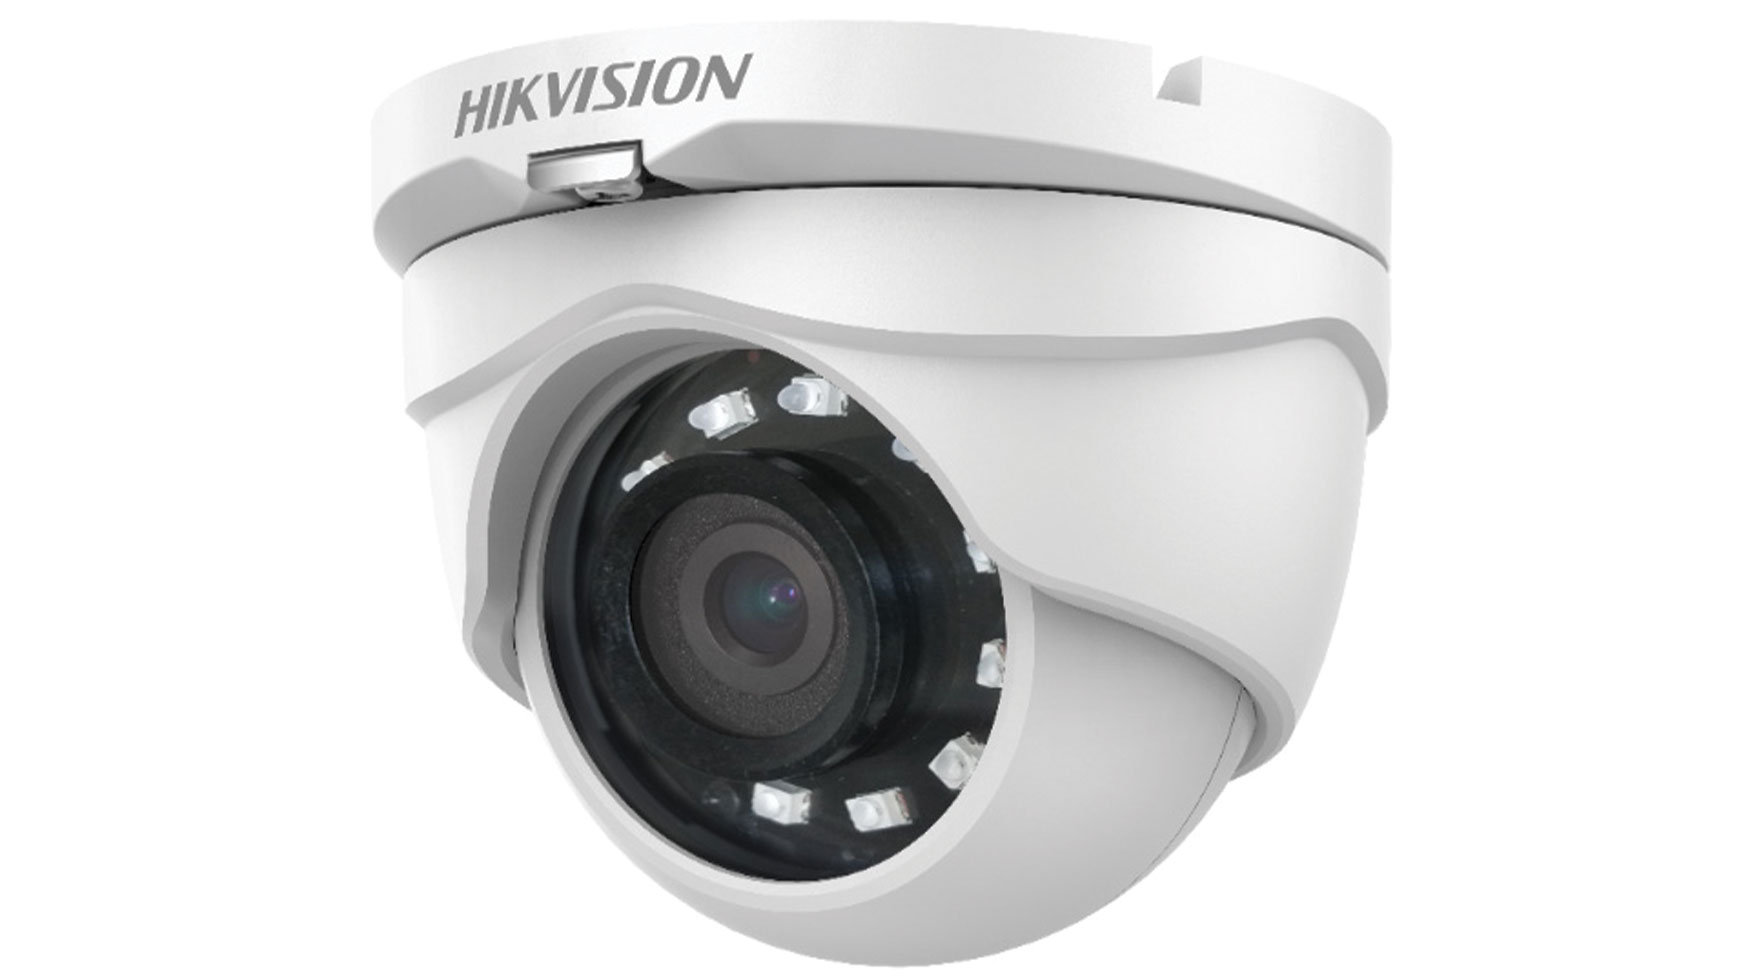 Hikvision DS-2CE56D0T-IRMF(2.8mm)(C) - 2MP TVI kamera u turret kućištu 4 u 1 TVI/AHD/CVI/CVBS režim.